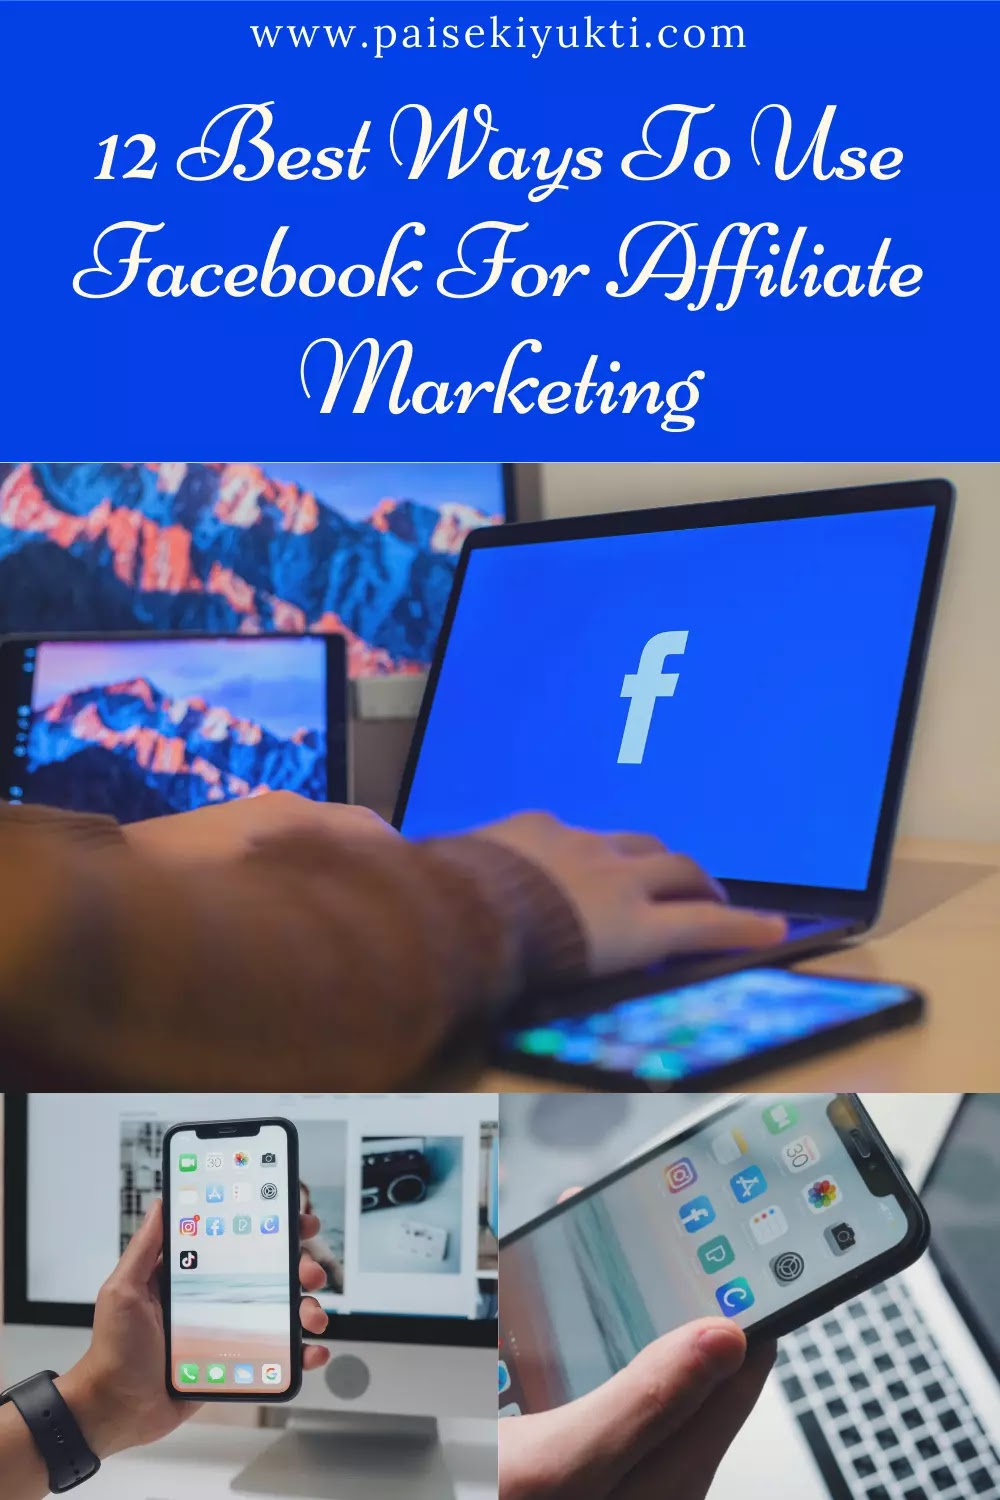 Best Ways To Do affiliate marketing On Facebook!